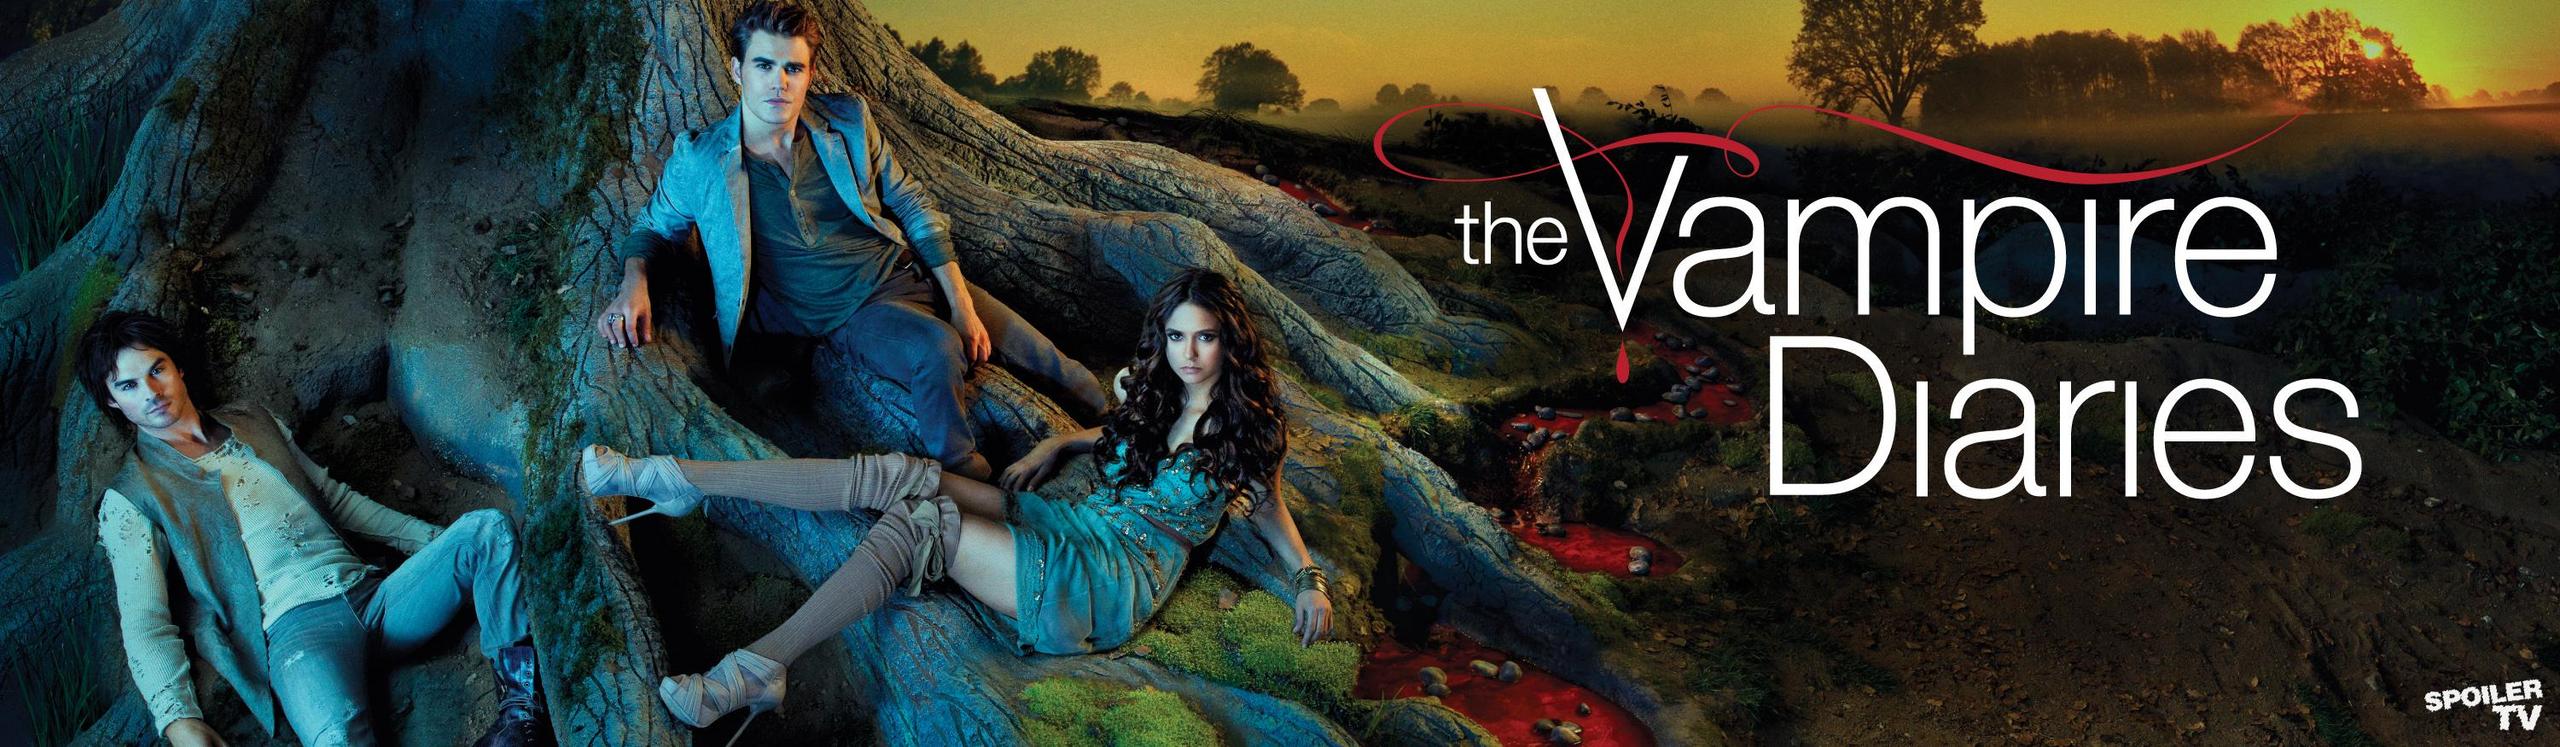 The Vampire Diaries - Season 3 - New Marketing Photos  - the-vampire-diaries photo